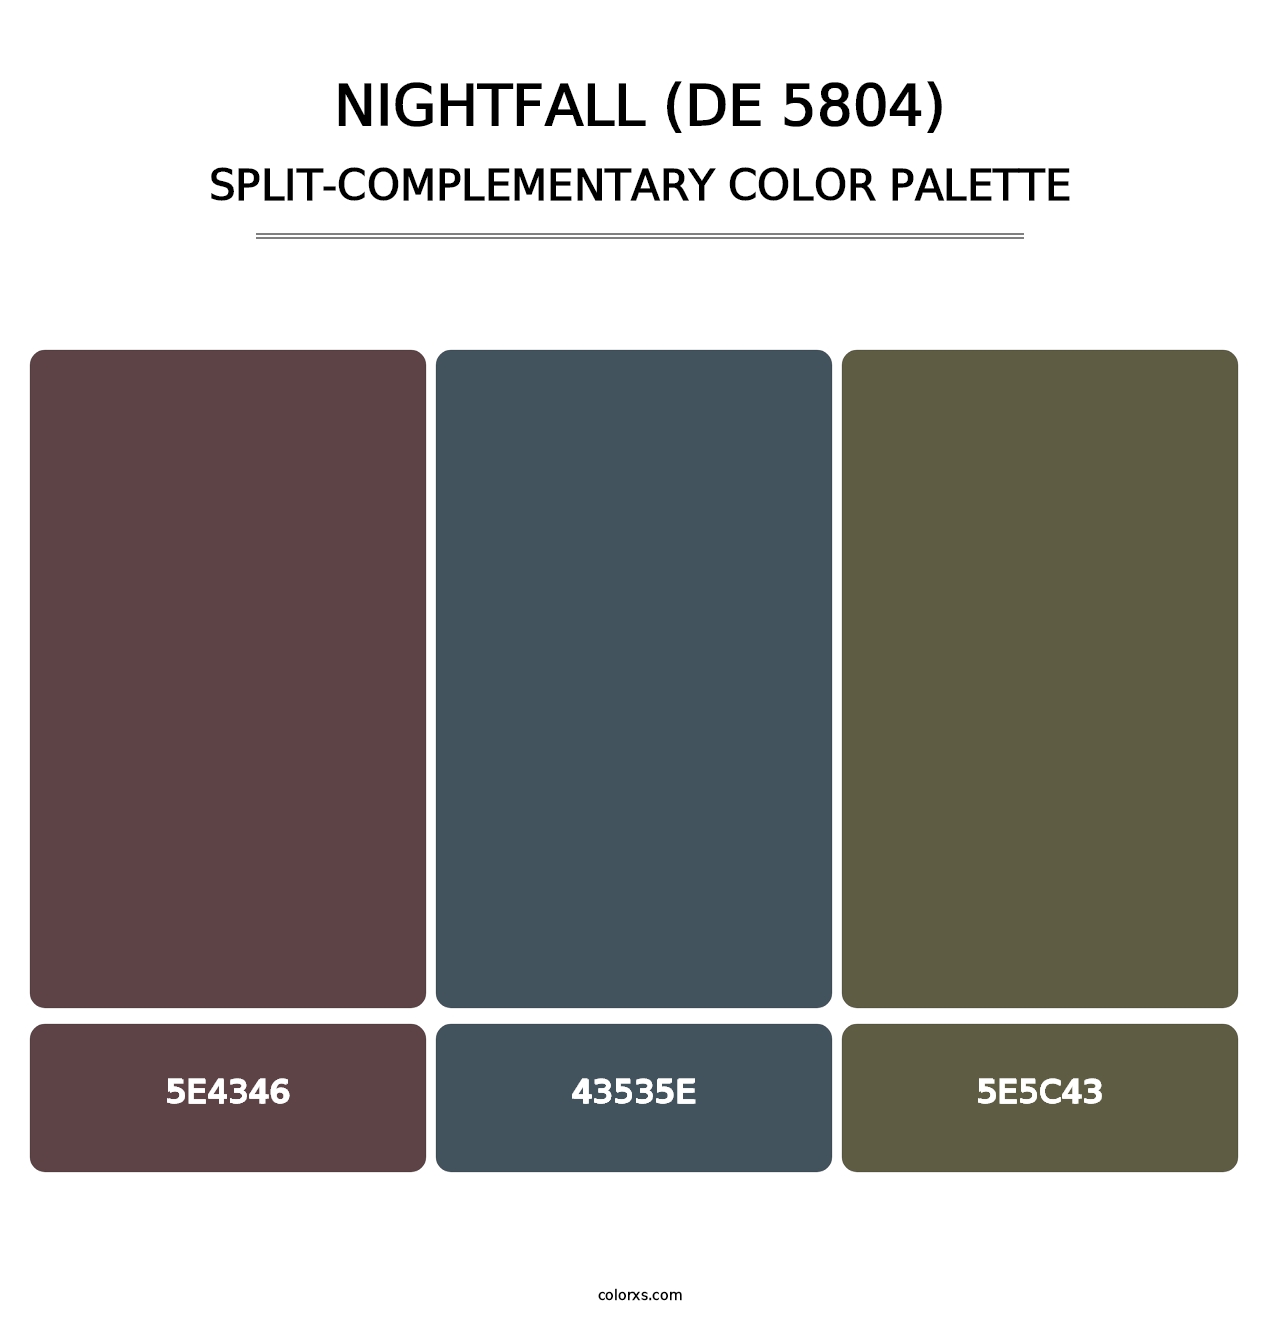 Nightfall (DE 5804) - Split-Complementary Color Palette